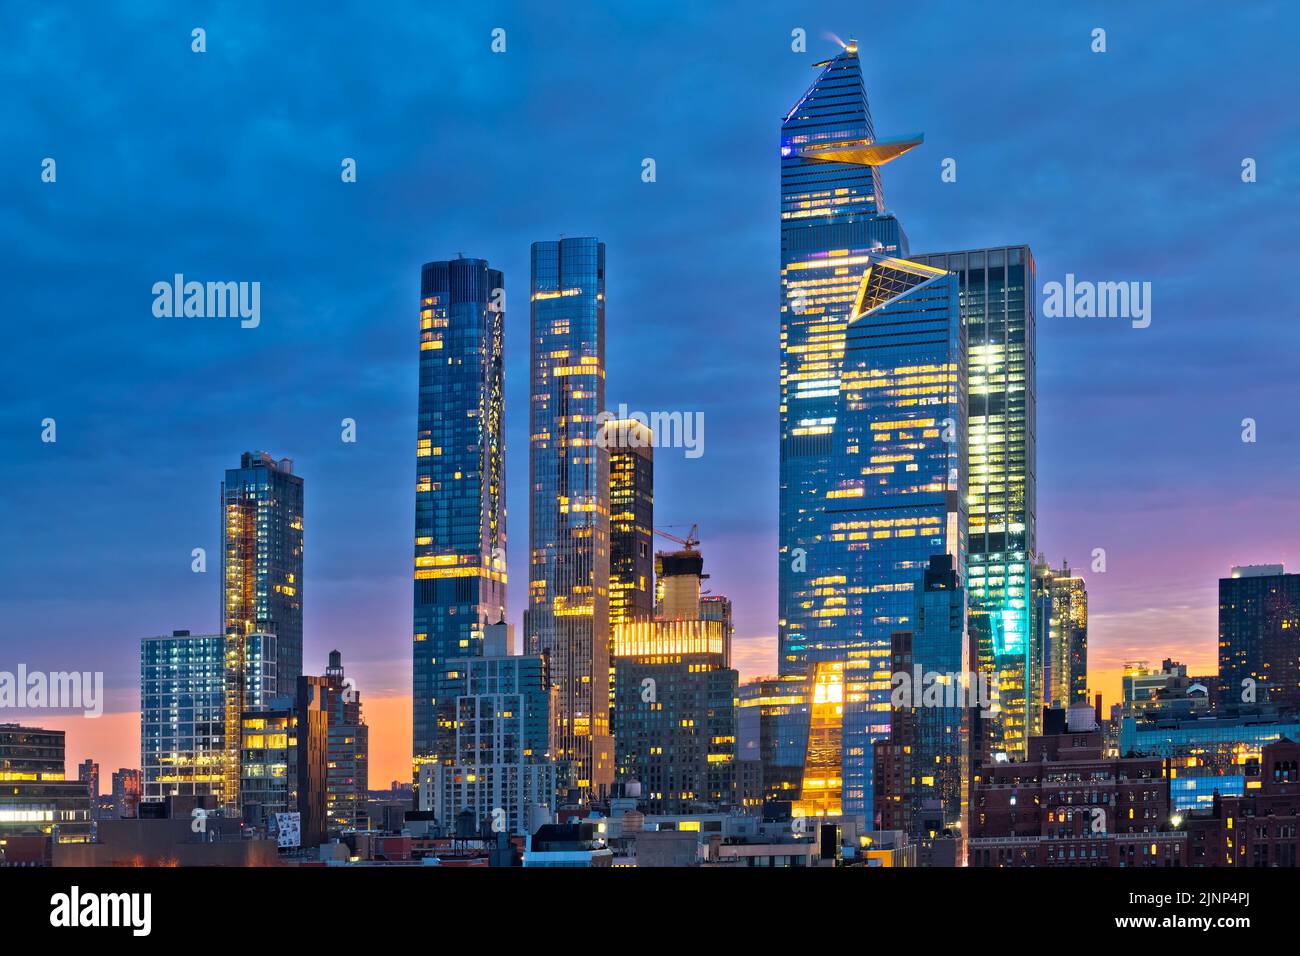 New York City Hudson Yards skyline evening view, United States of America Stock Photo